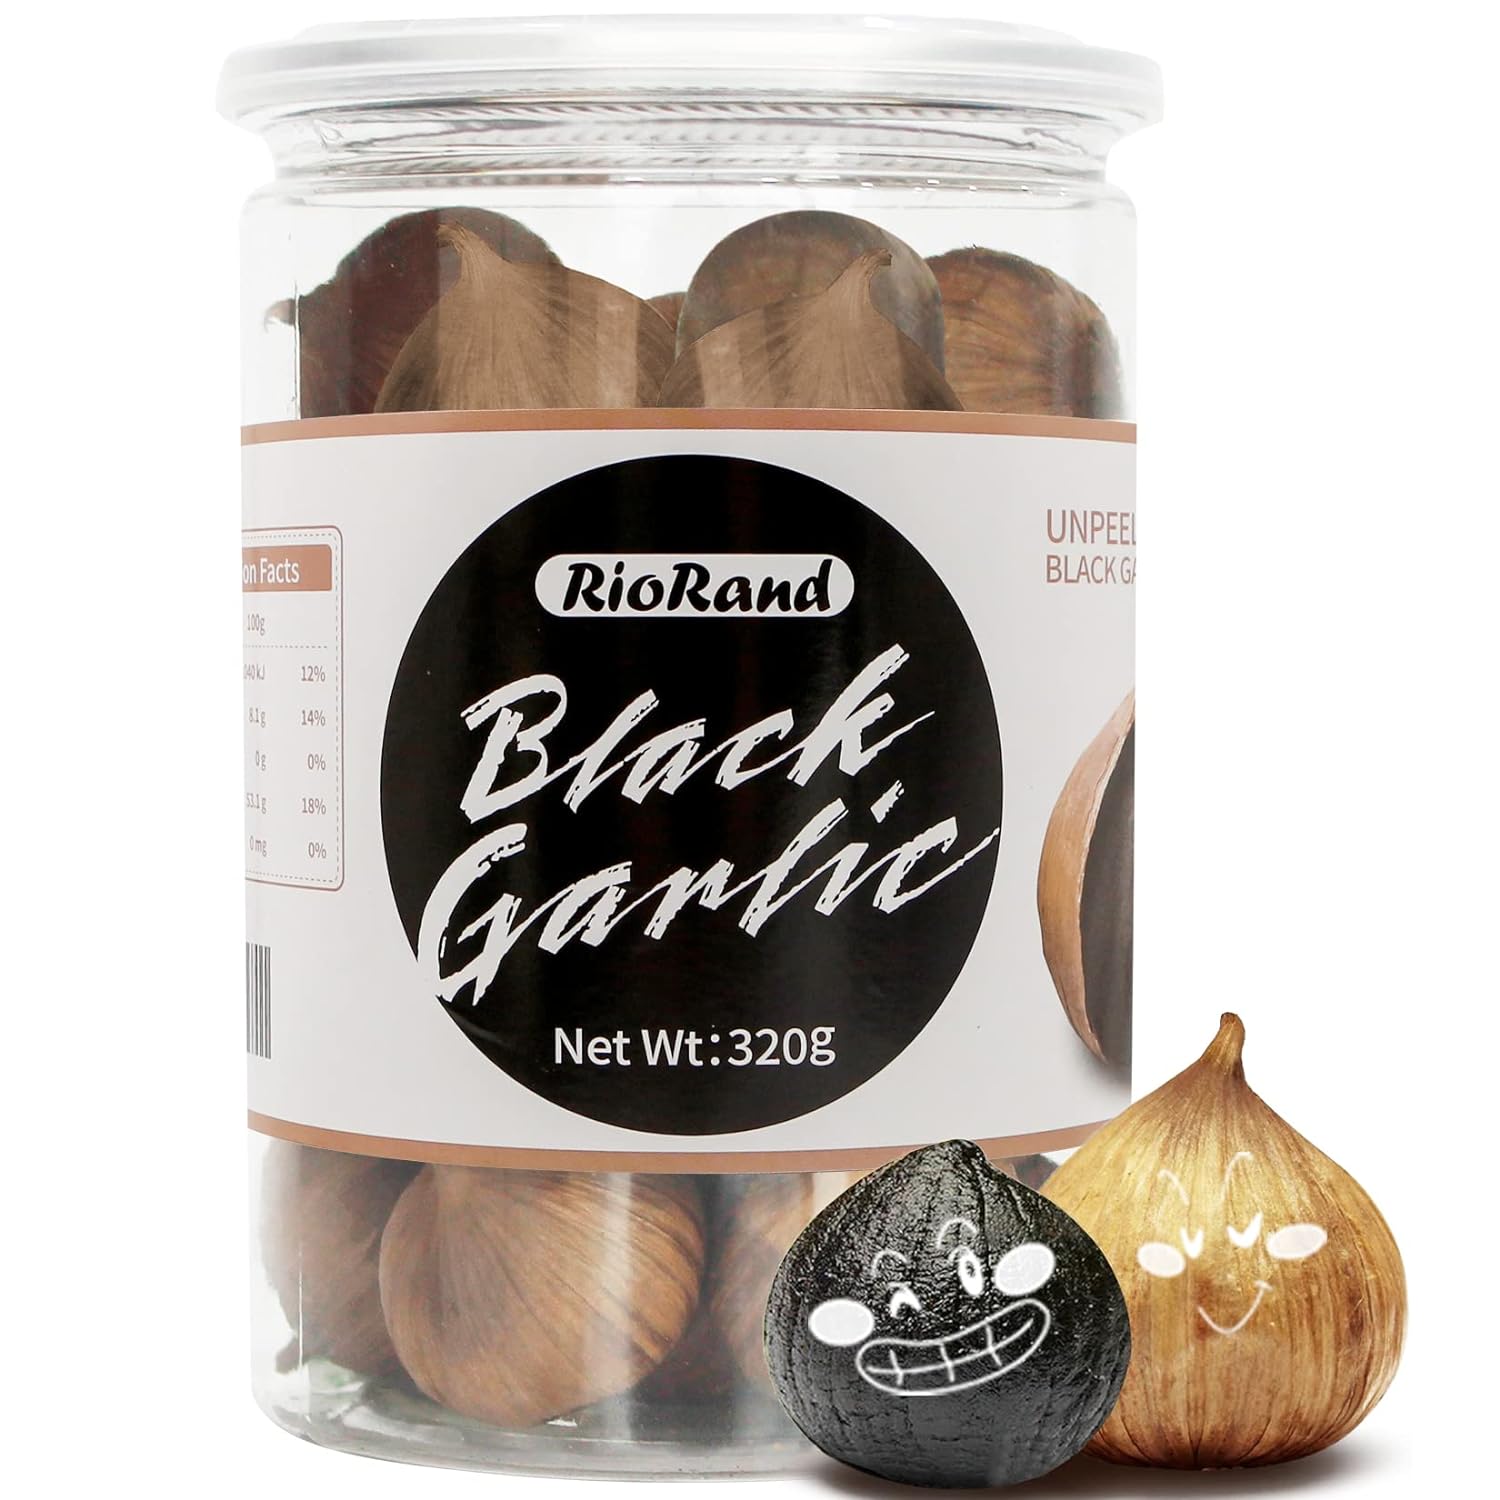 RioRand Black Garlic 320g Whole Black Garlic Aged for Full 90 Days Black Garlic Jar 0.7 Pounds